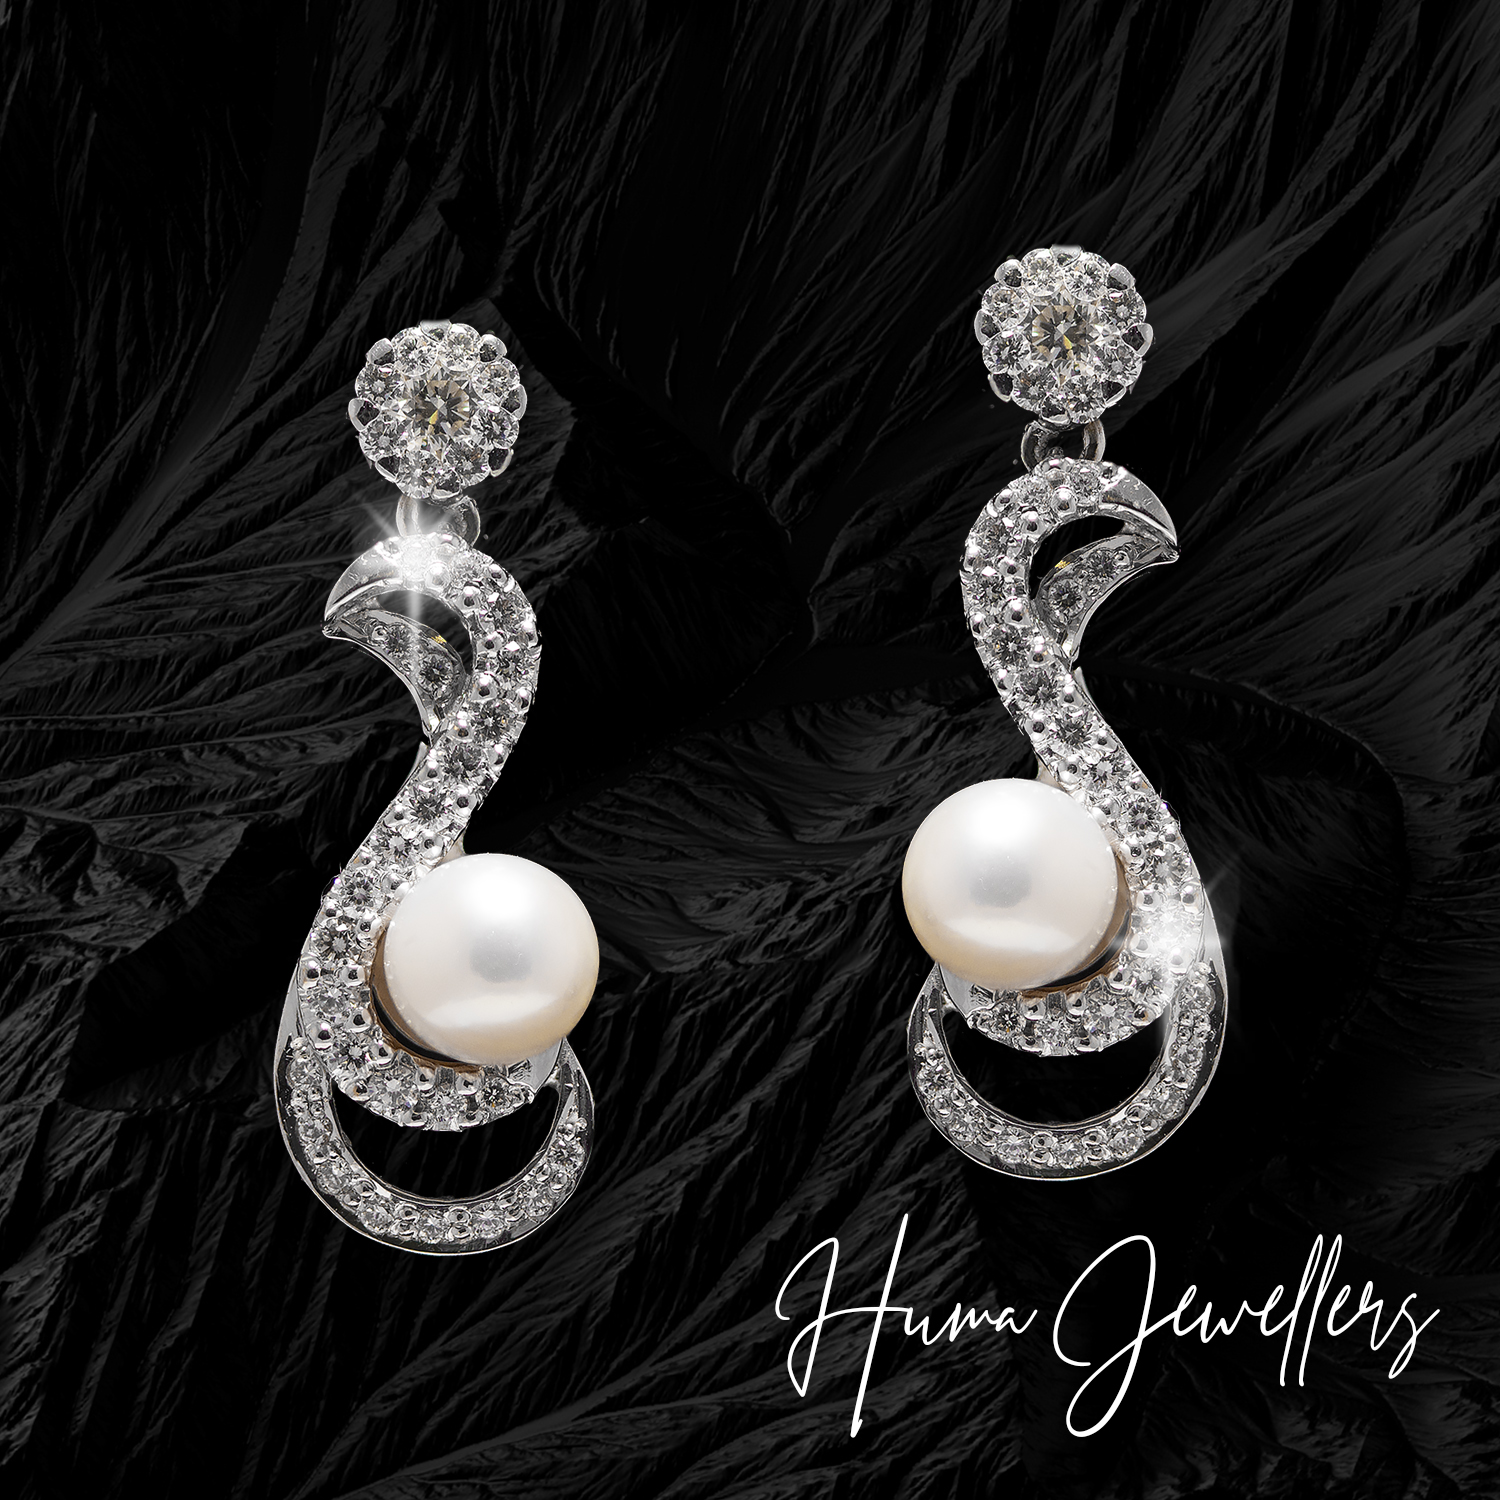 modern fancy style women diamond earrings tops with diamond illusion and natural fresh water pearls at huma jewellers karachi pakistan